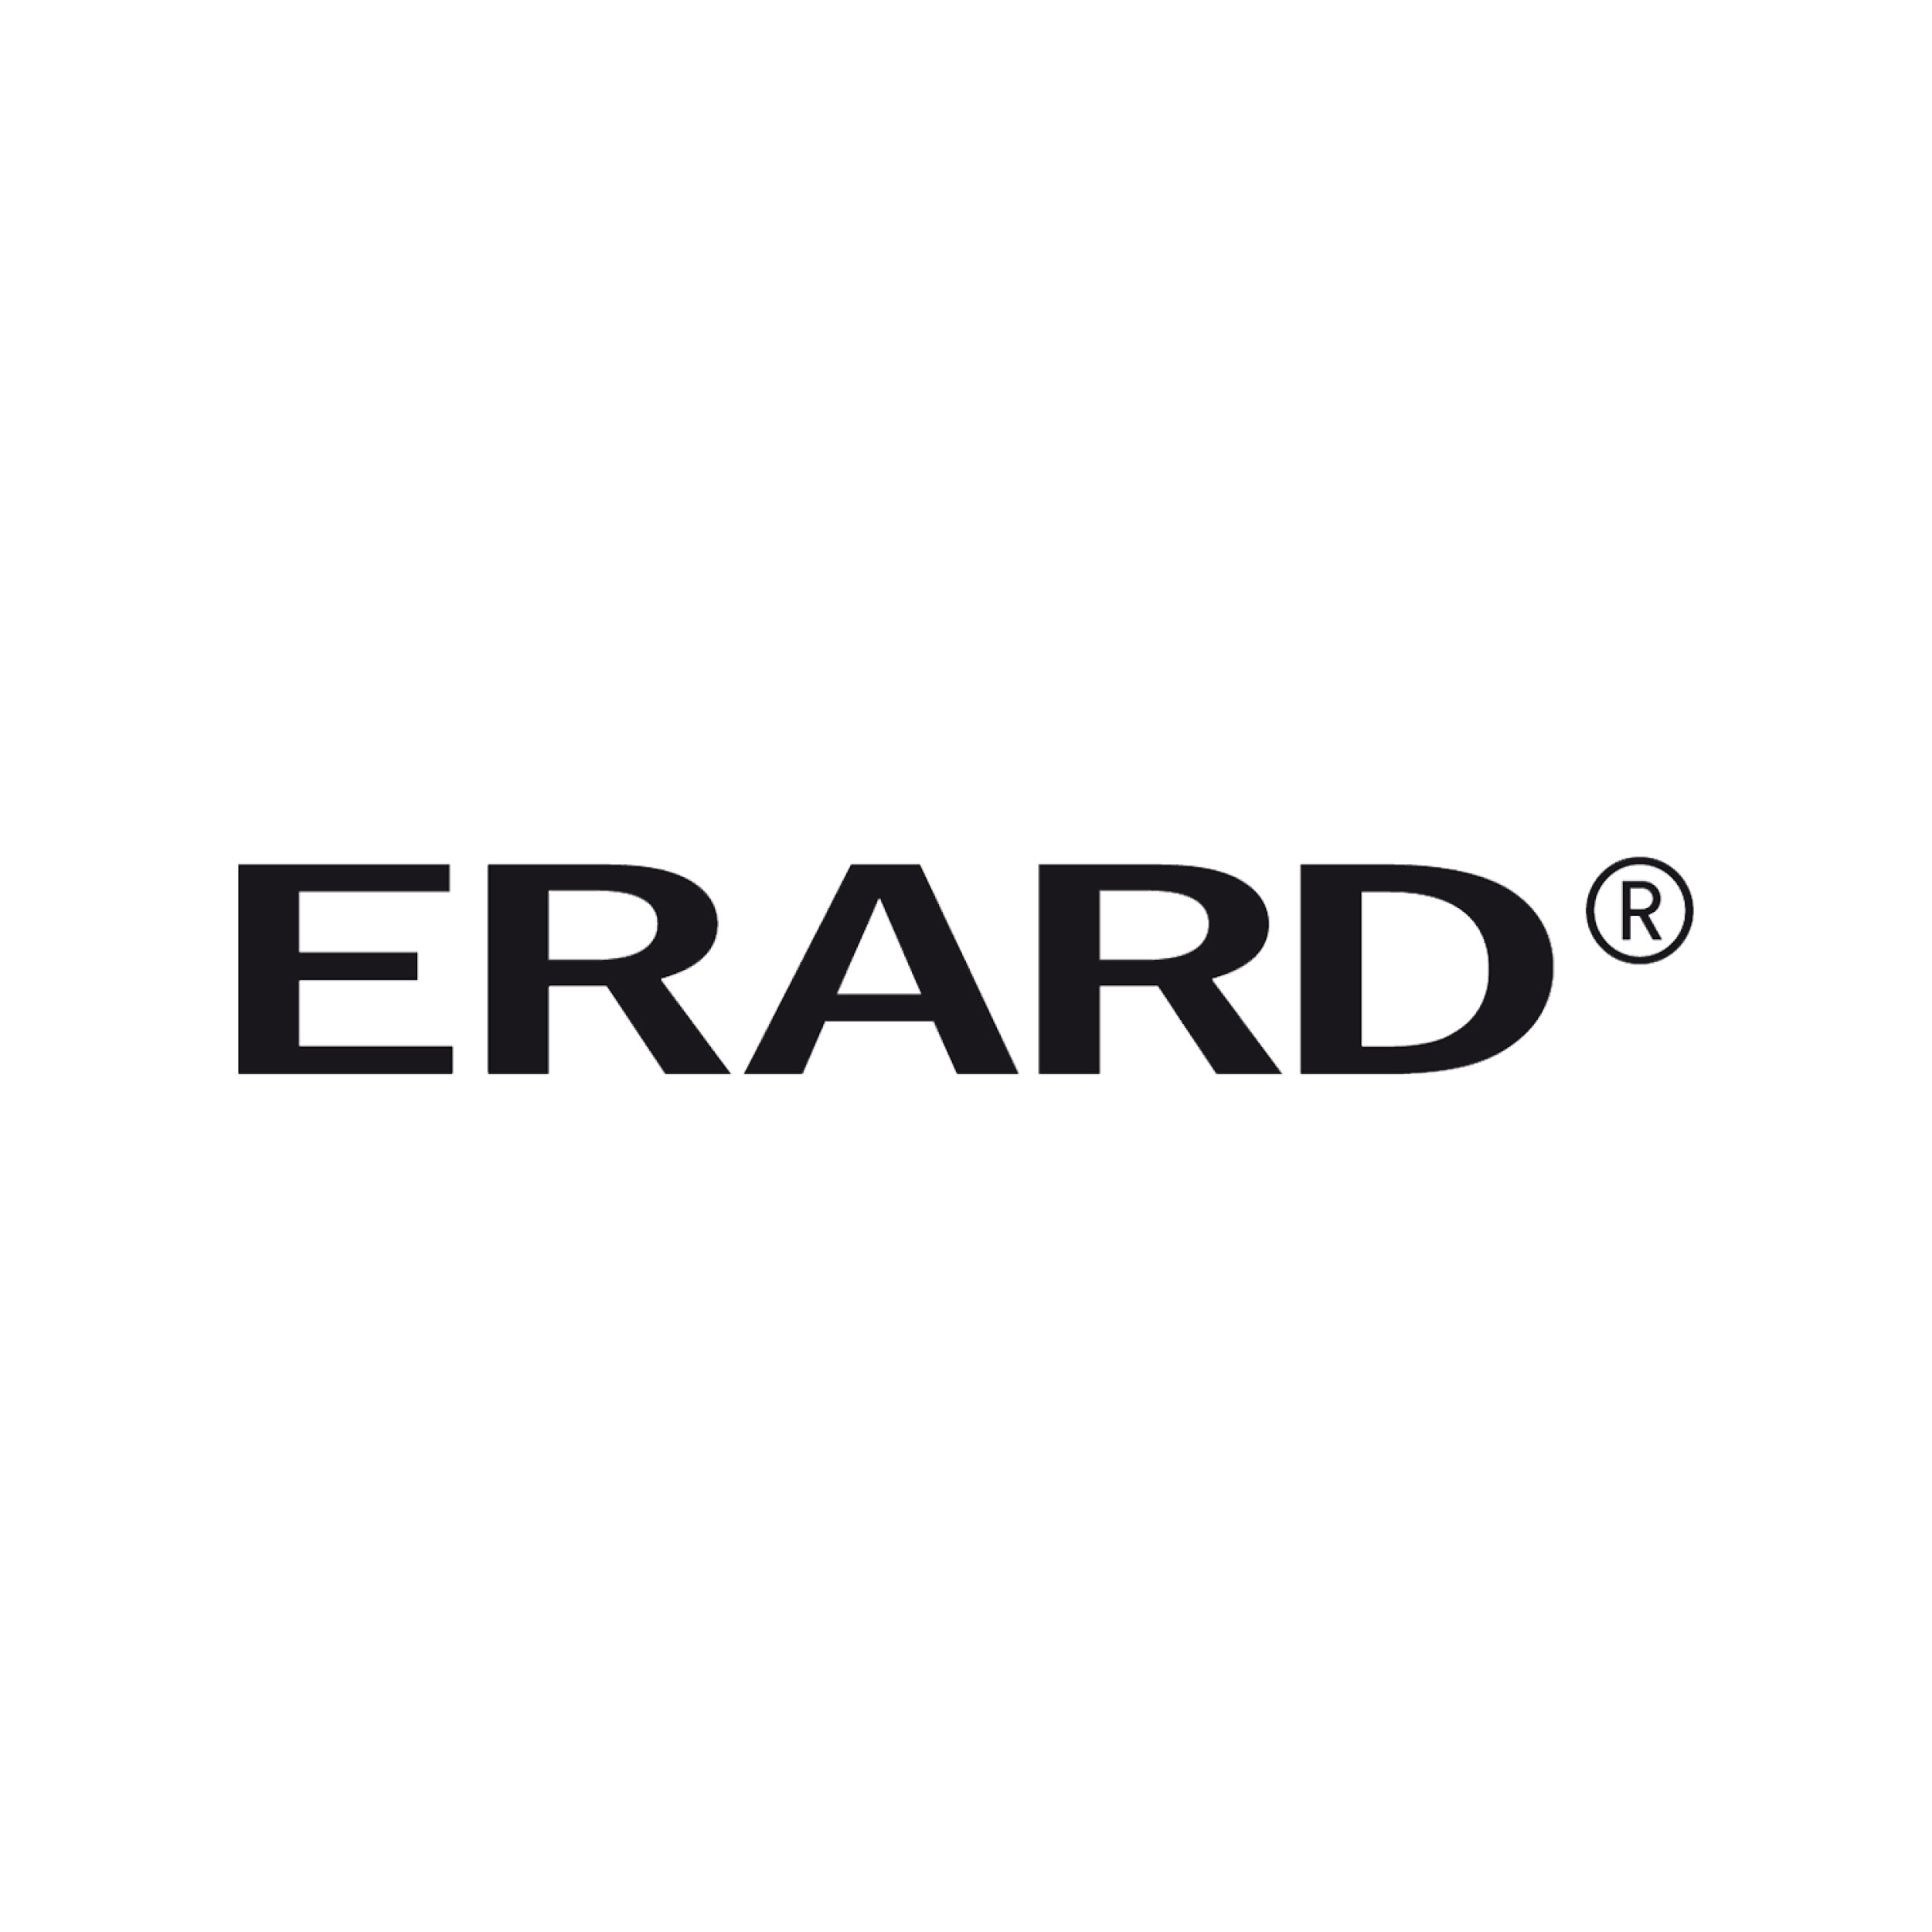 Logo de la marque référence Erard